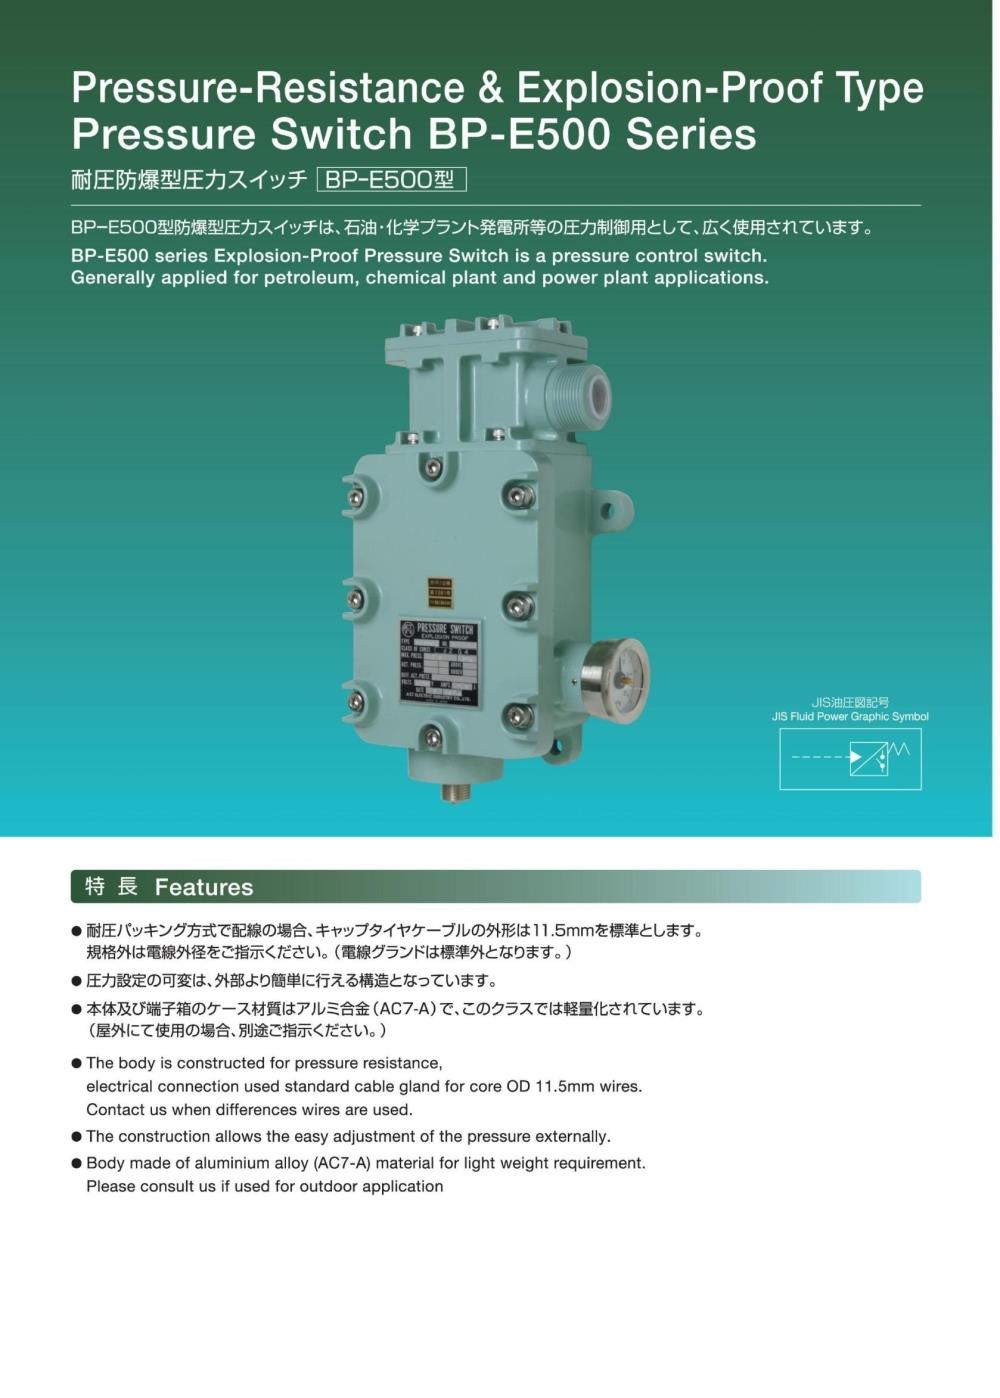 ACT Pressure Switch BP-E500-30 Series